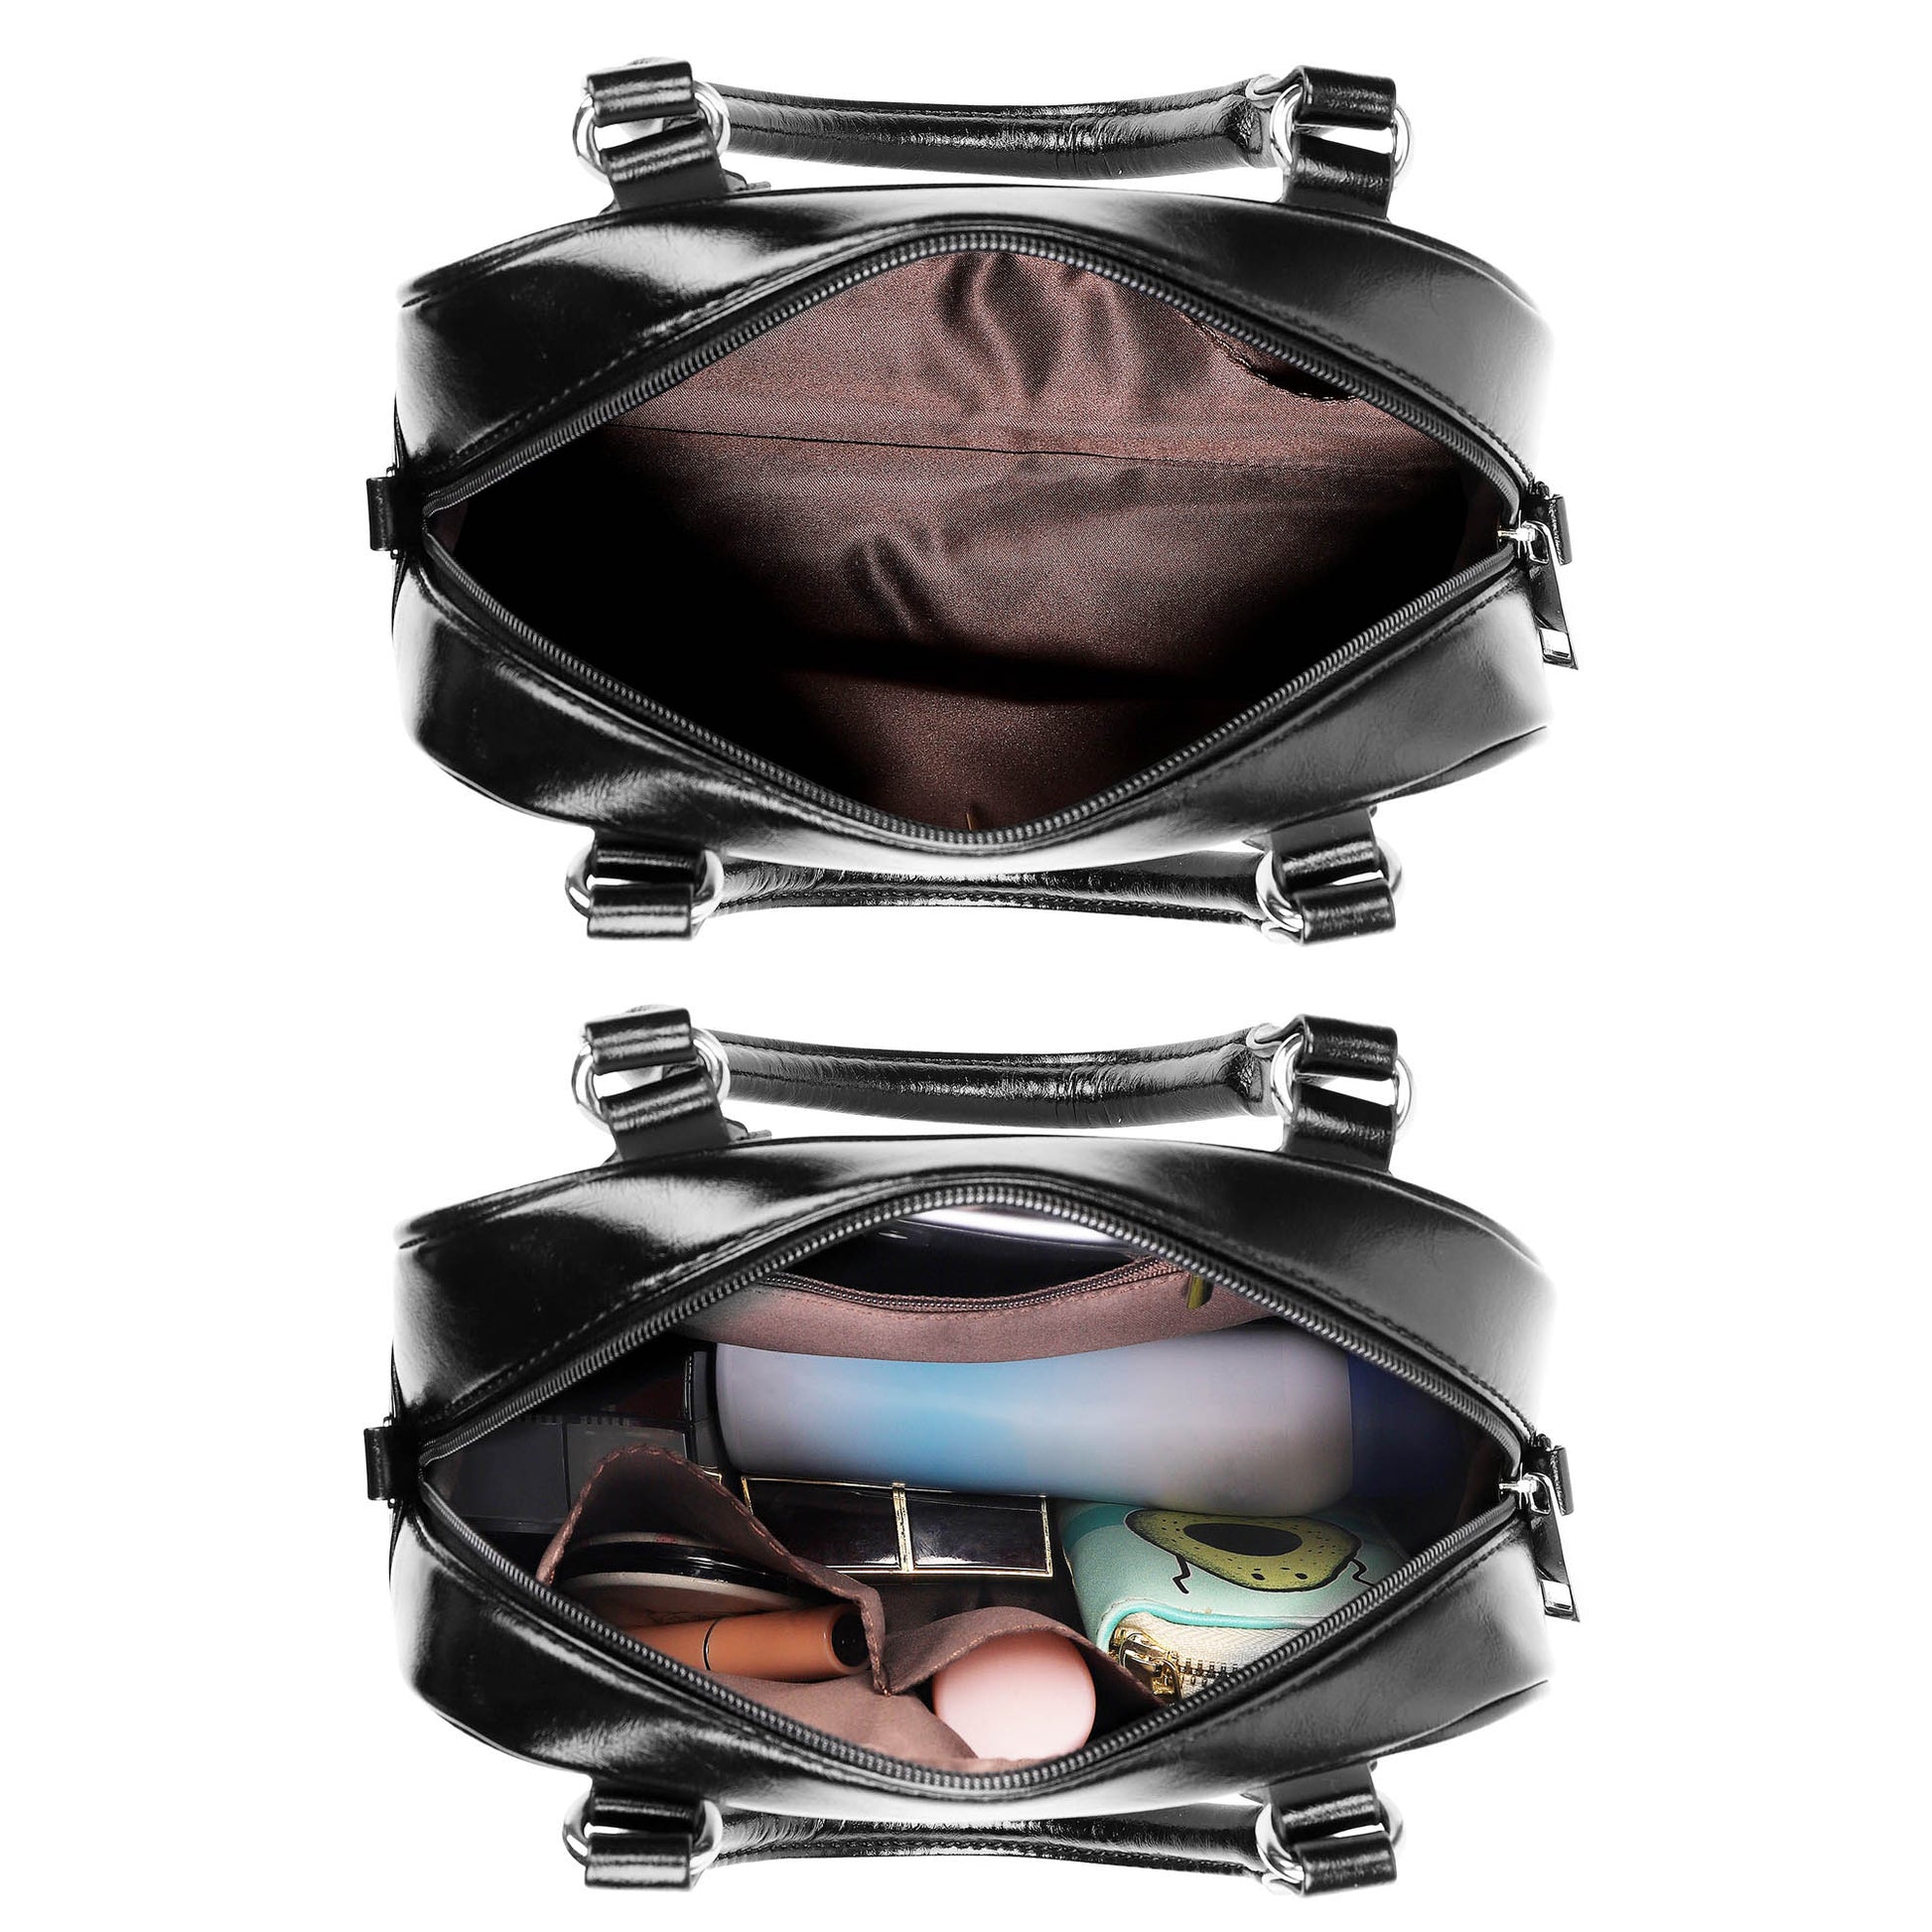 Baxter Modern Tartan Shoulder Handbags - Tartanvibesclothing